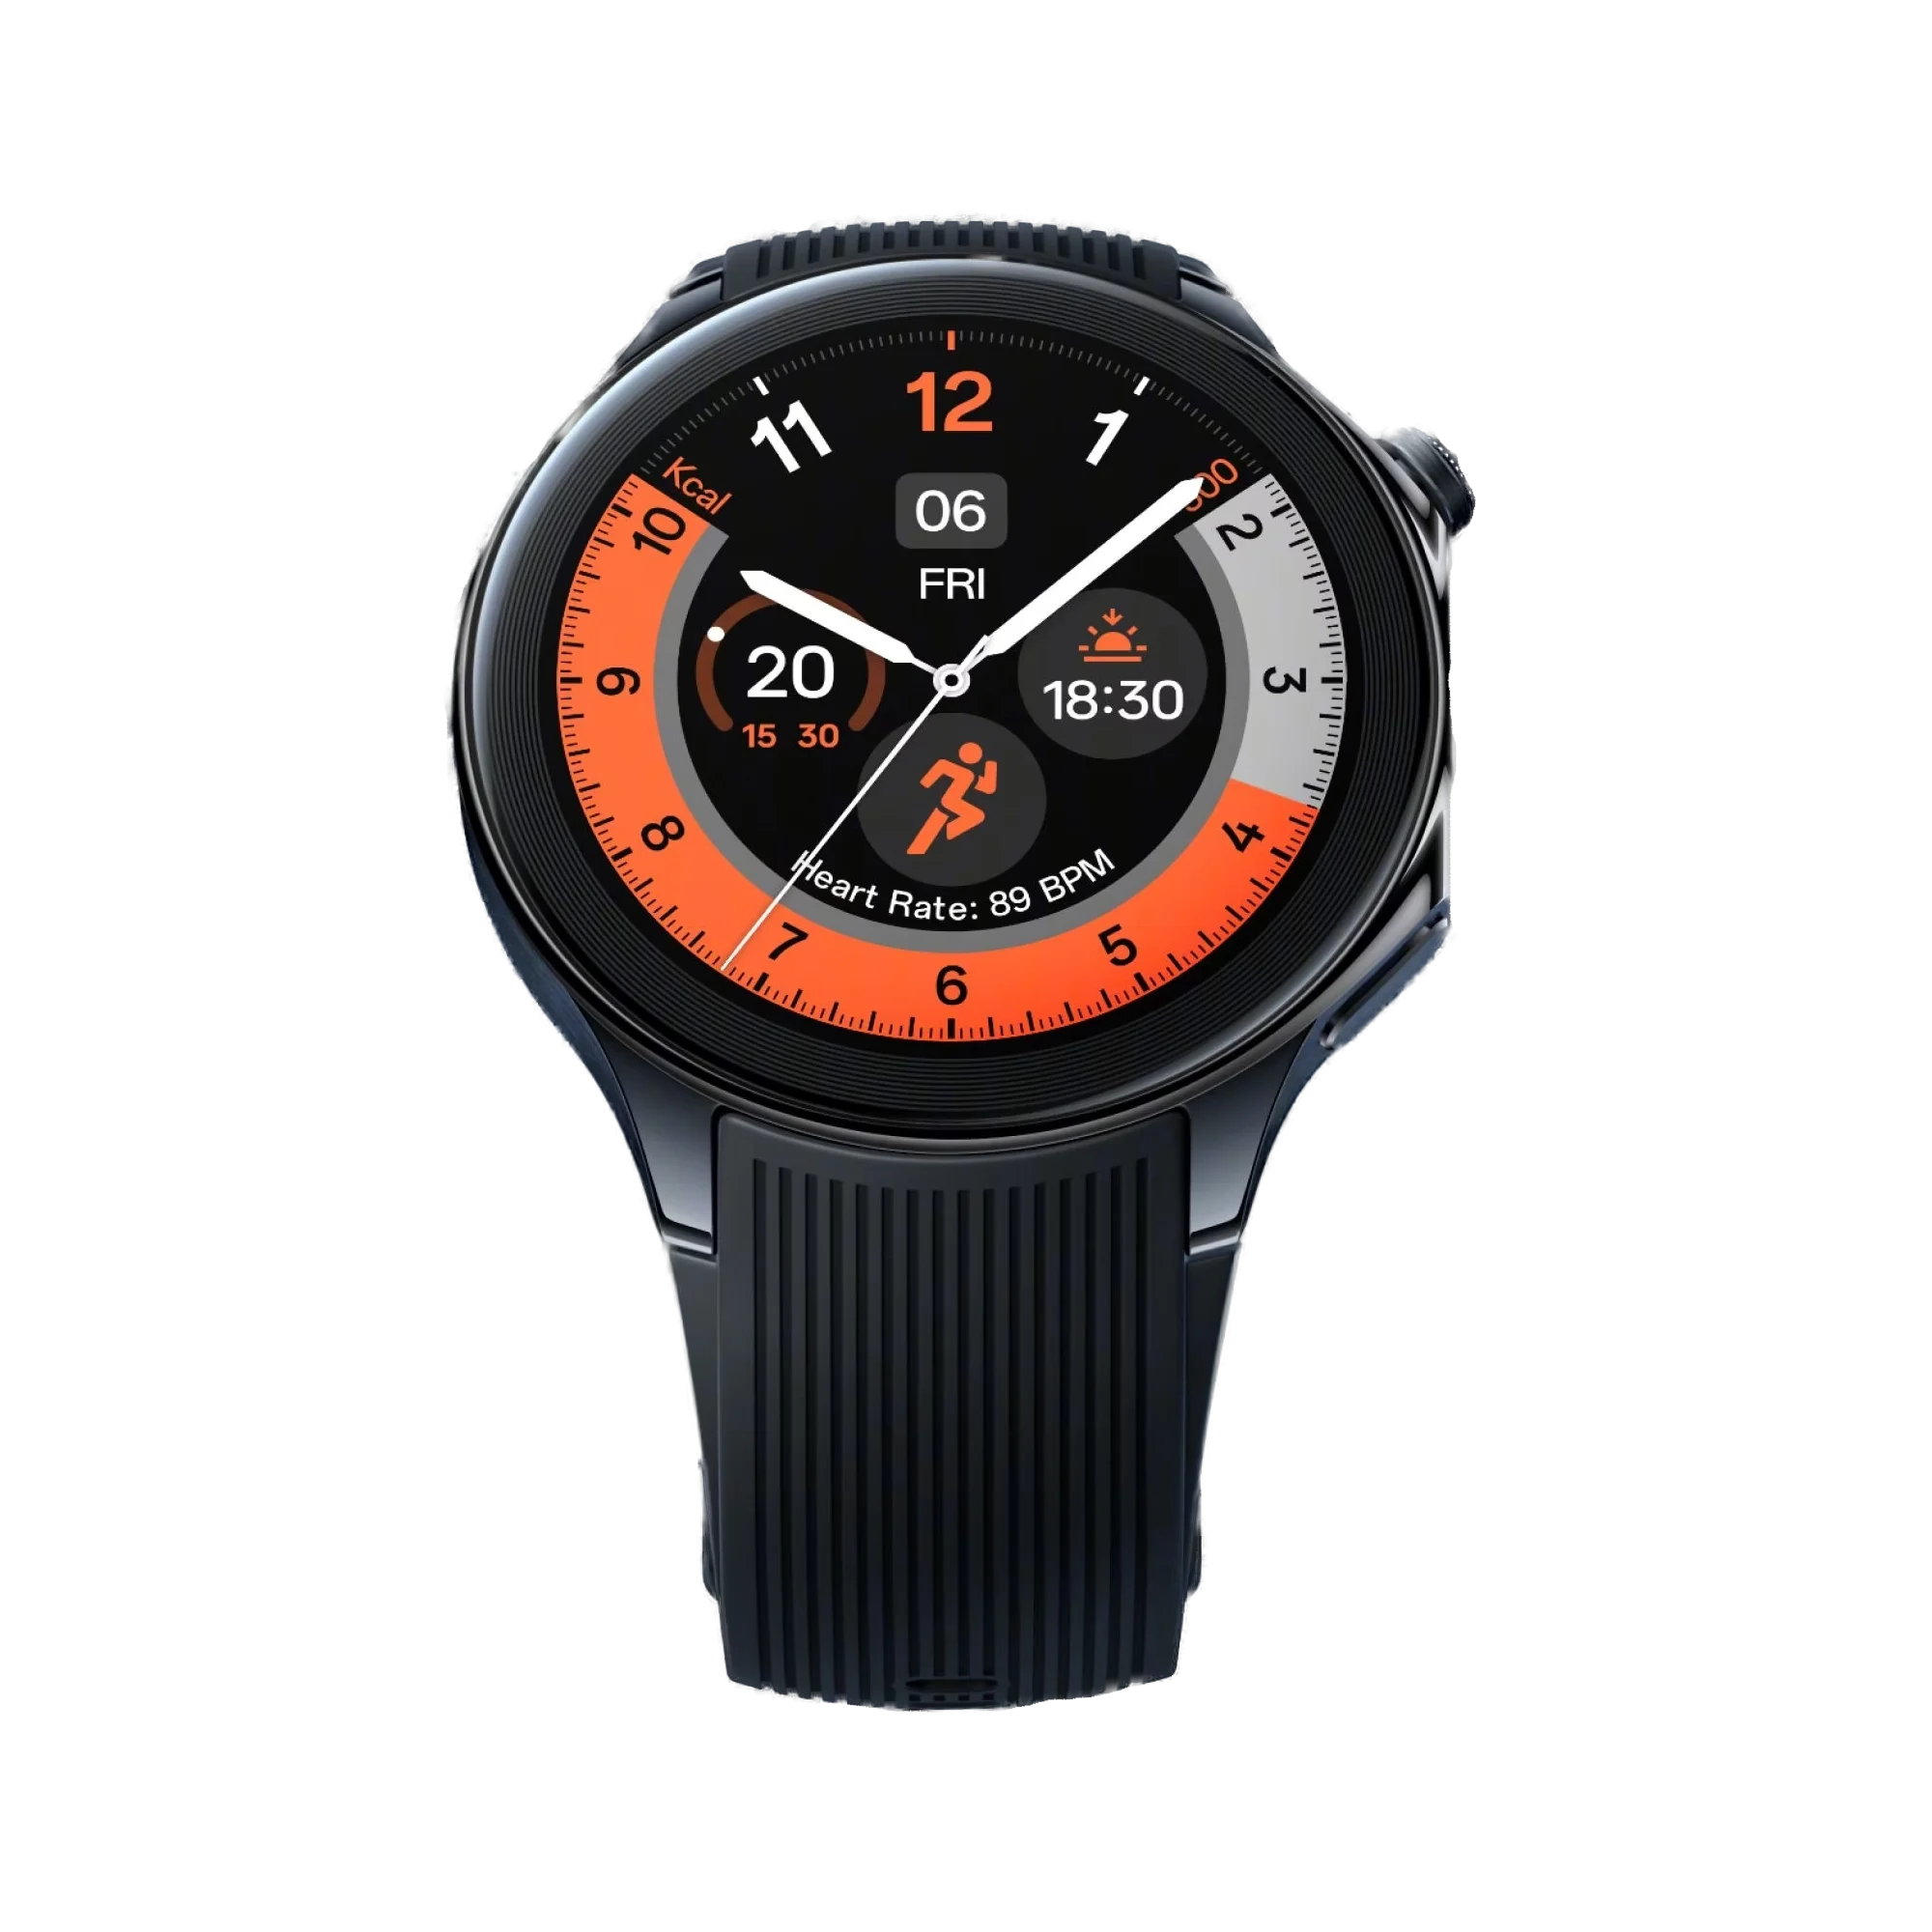 Foto: Smartwatch Oppo Watch X